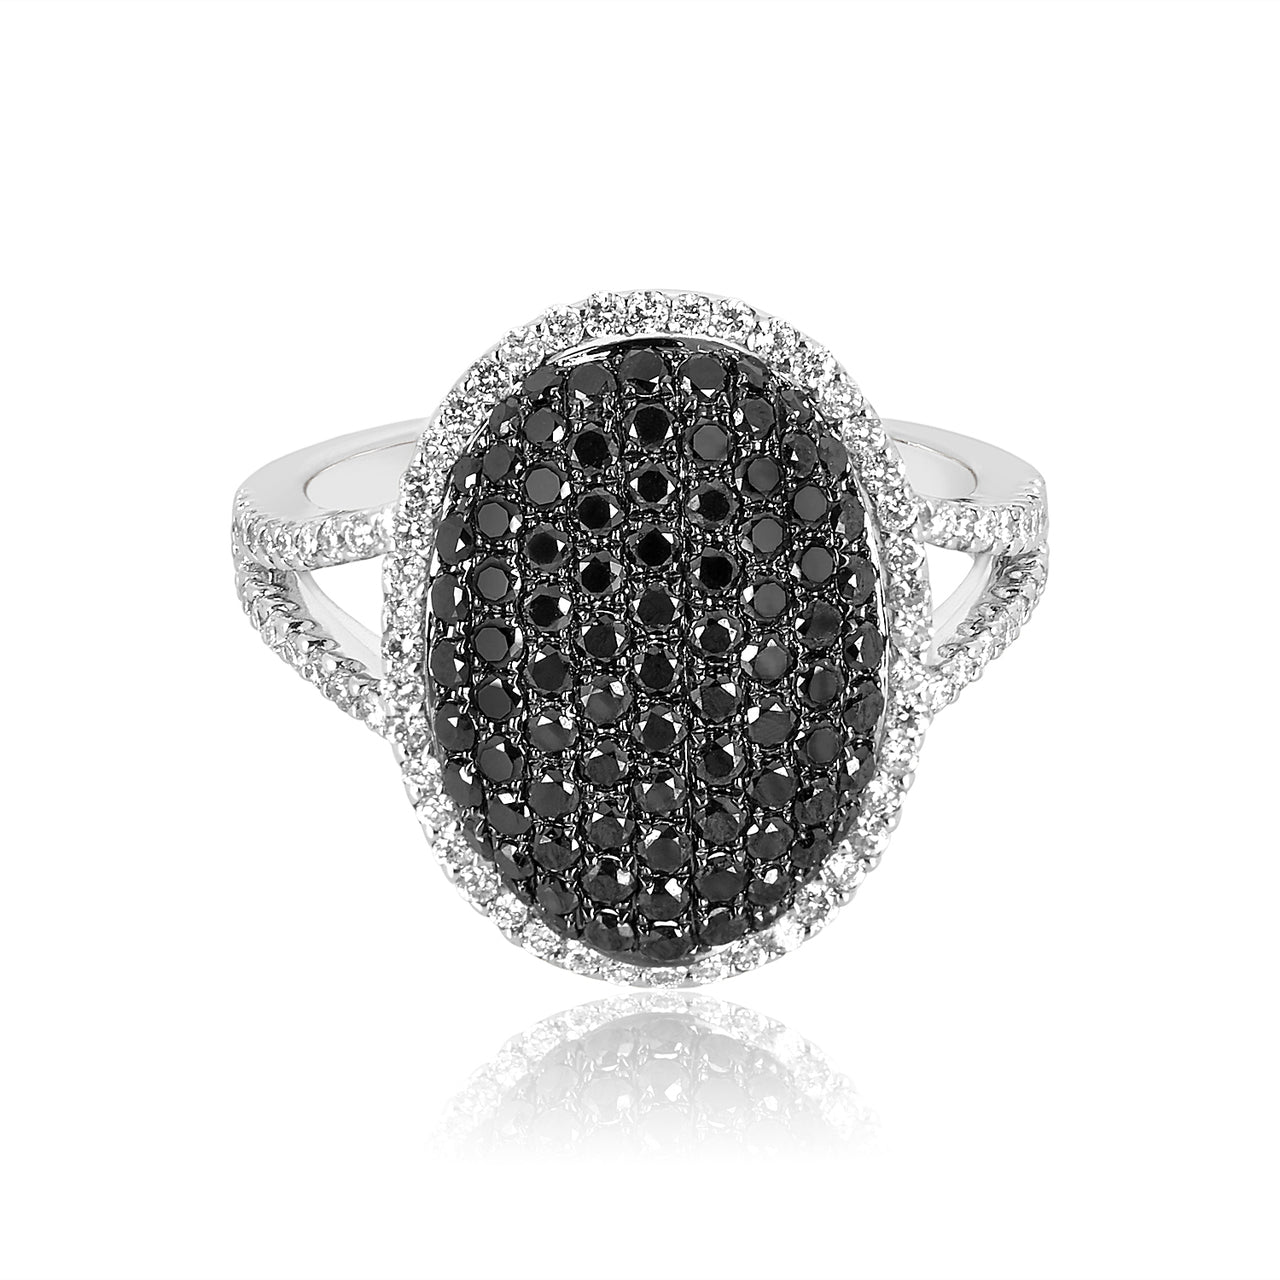 Oval Black & White Diamond Ring